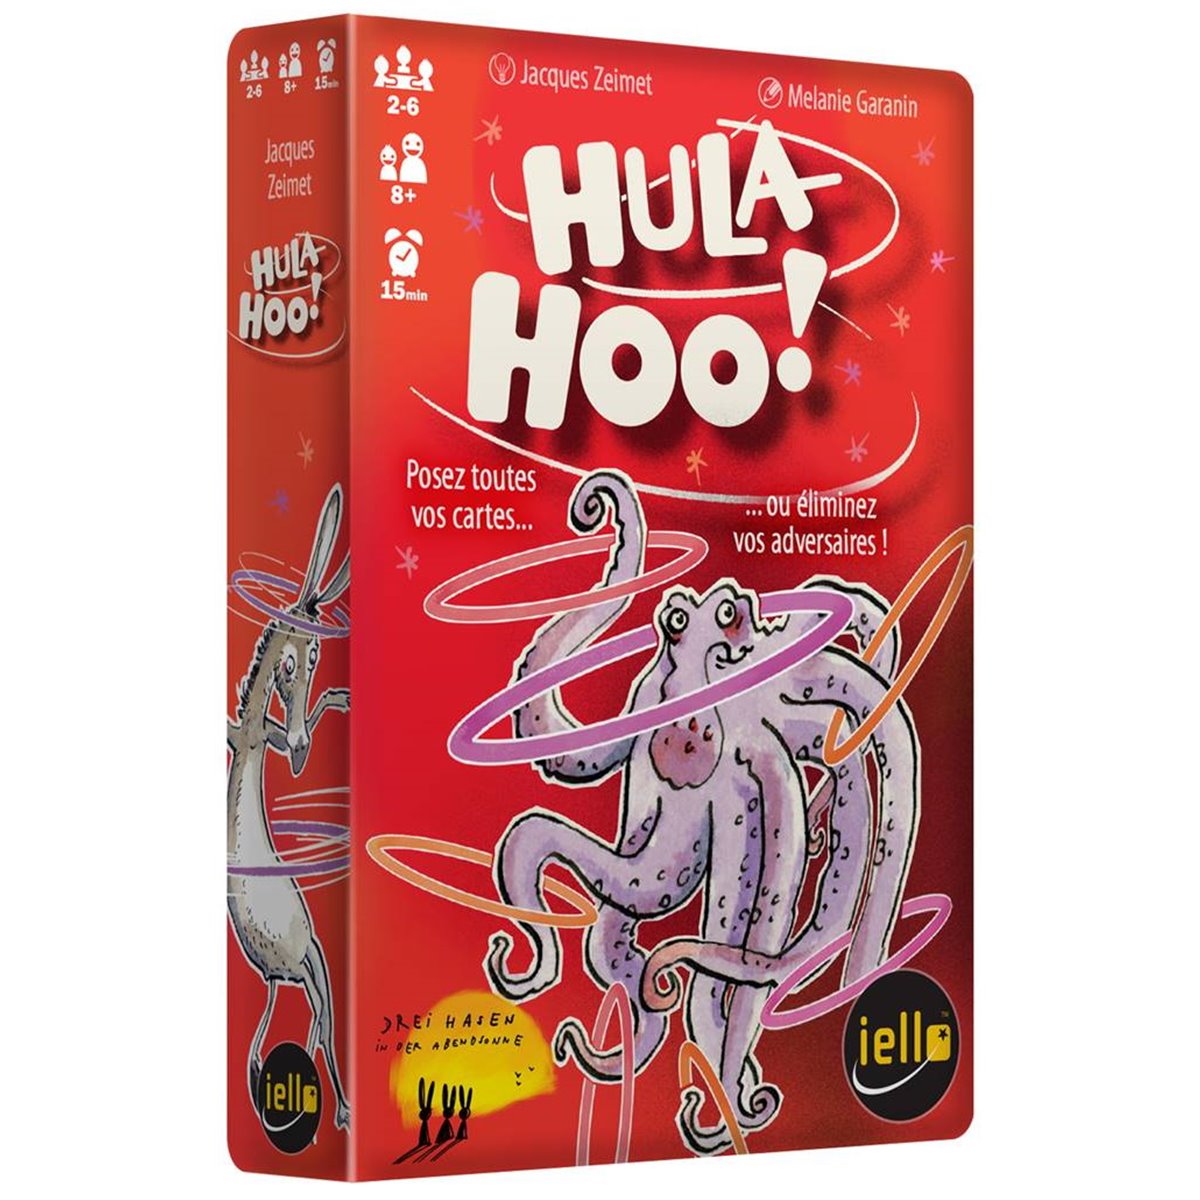 Hula hoop : les bonnes raisons de se mettre au hula hoop - Elle